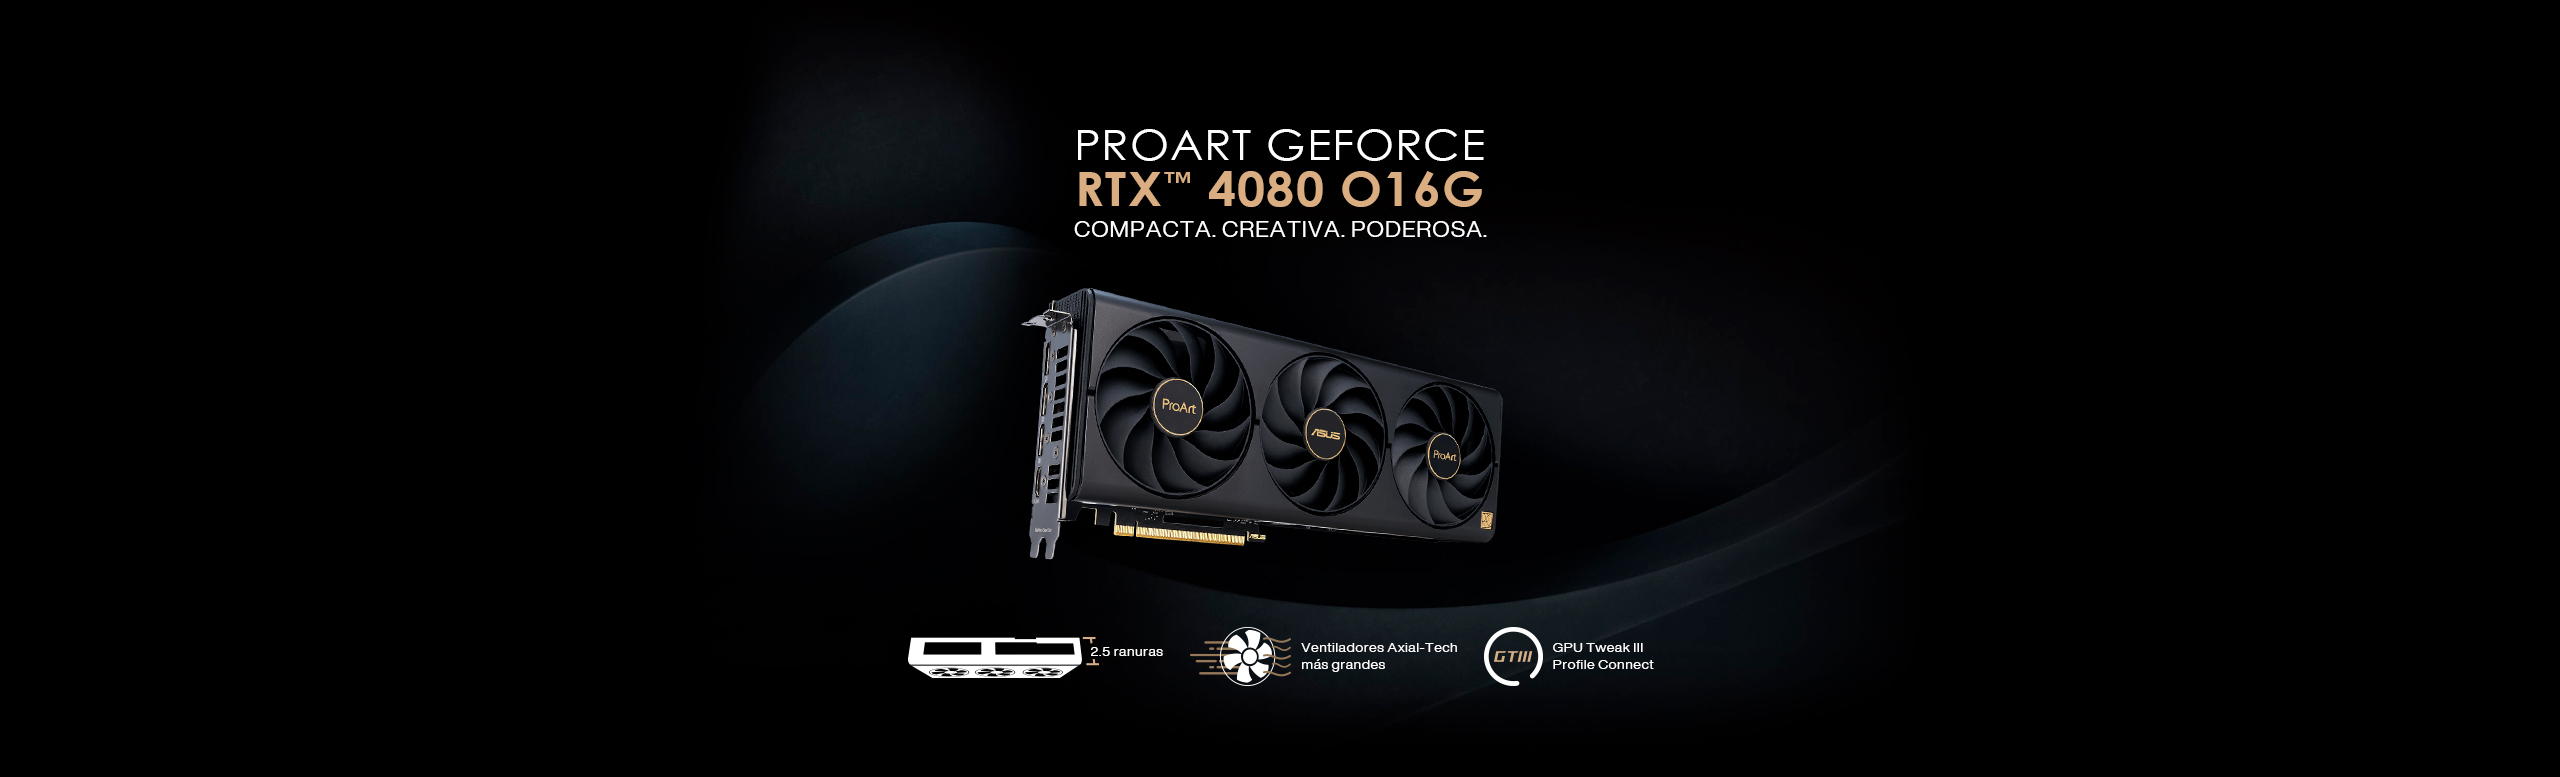 ProArt GeForce RTX 4080 O16G